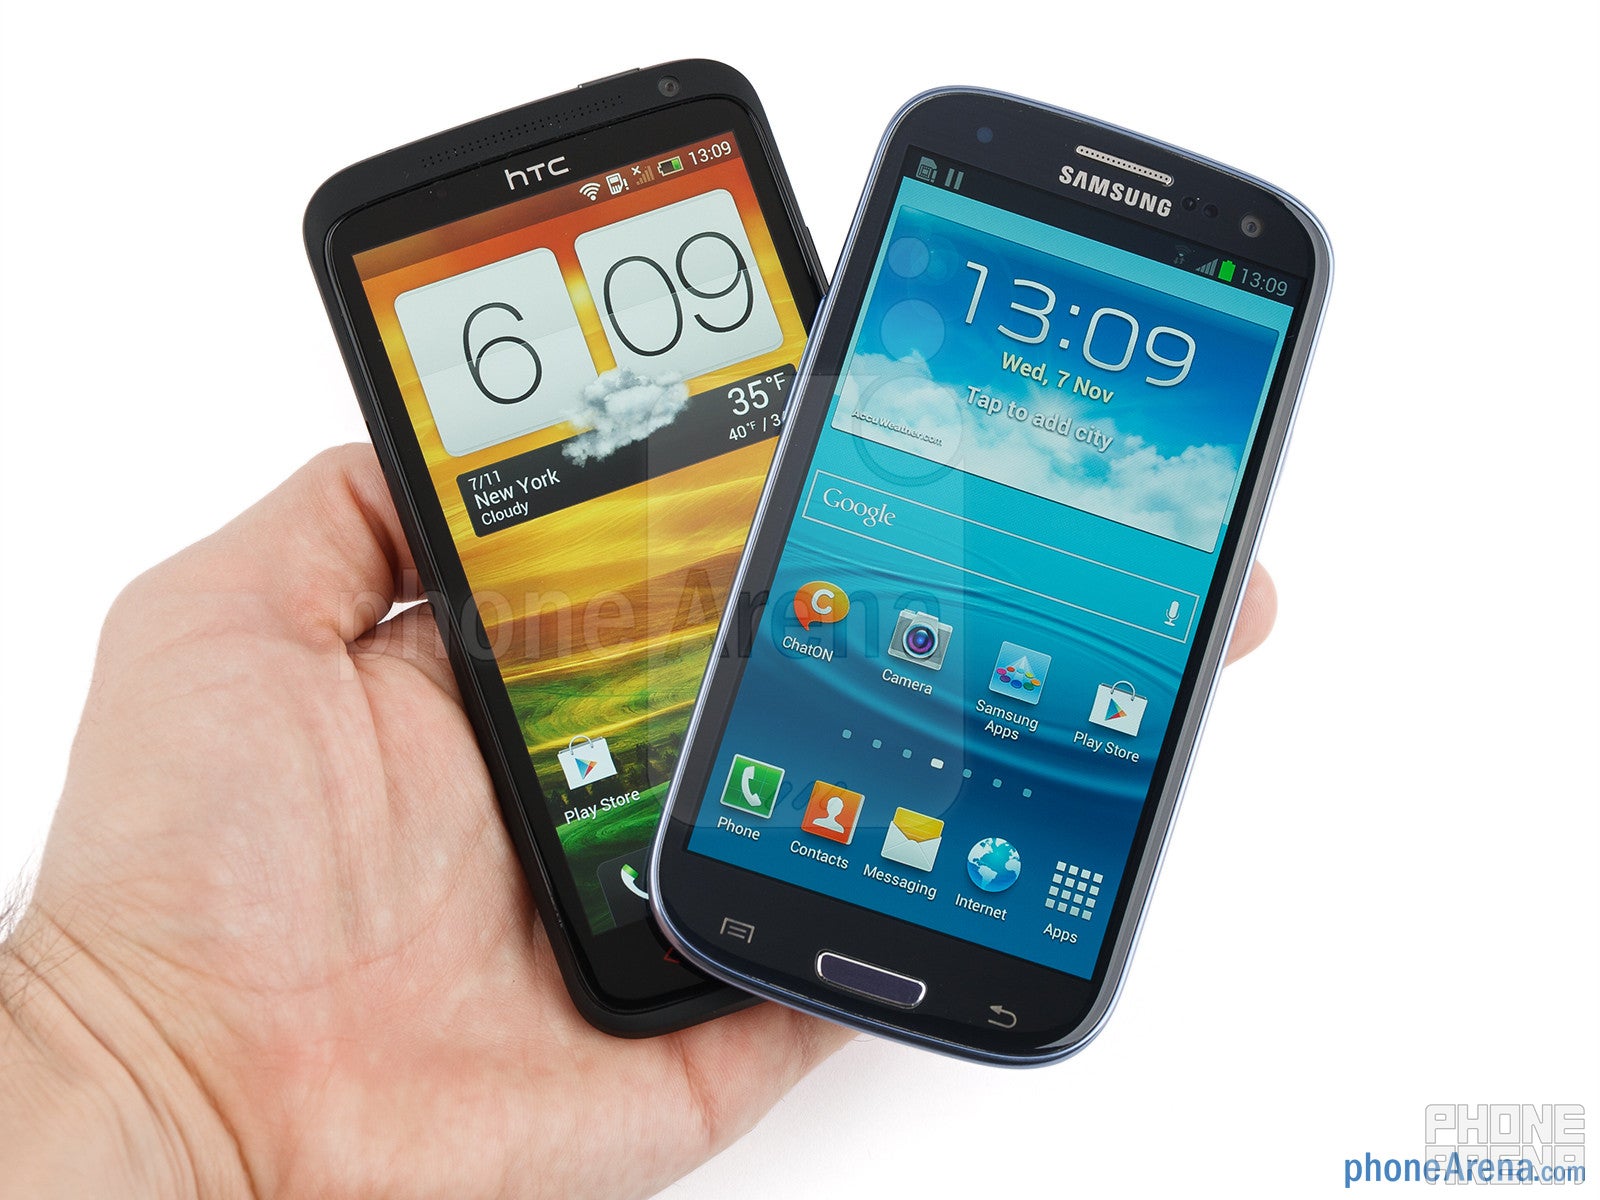 HTC One X+ vs Samsung Galaxy S III